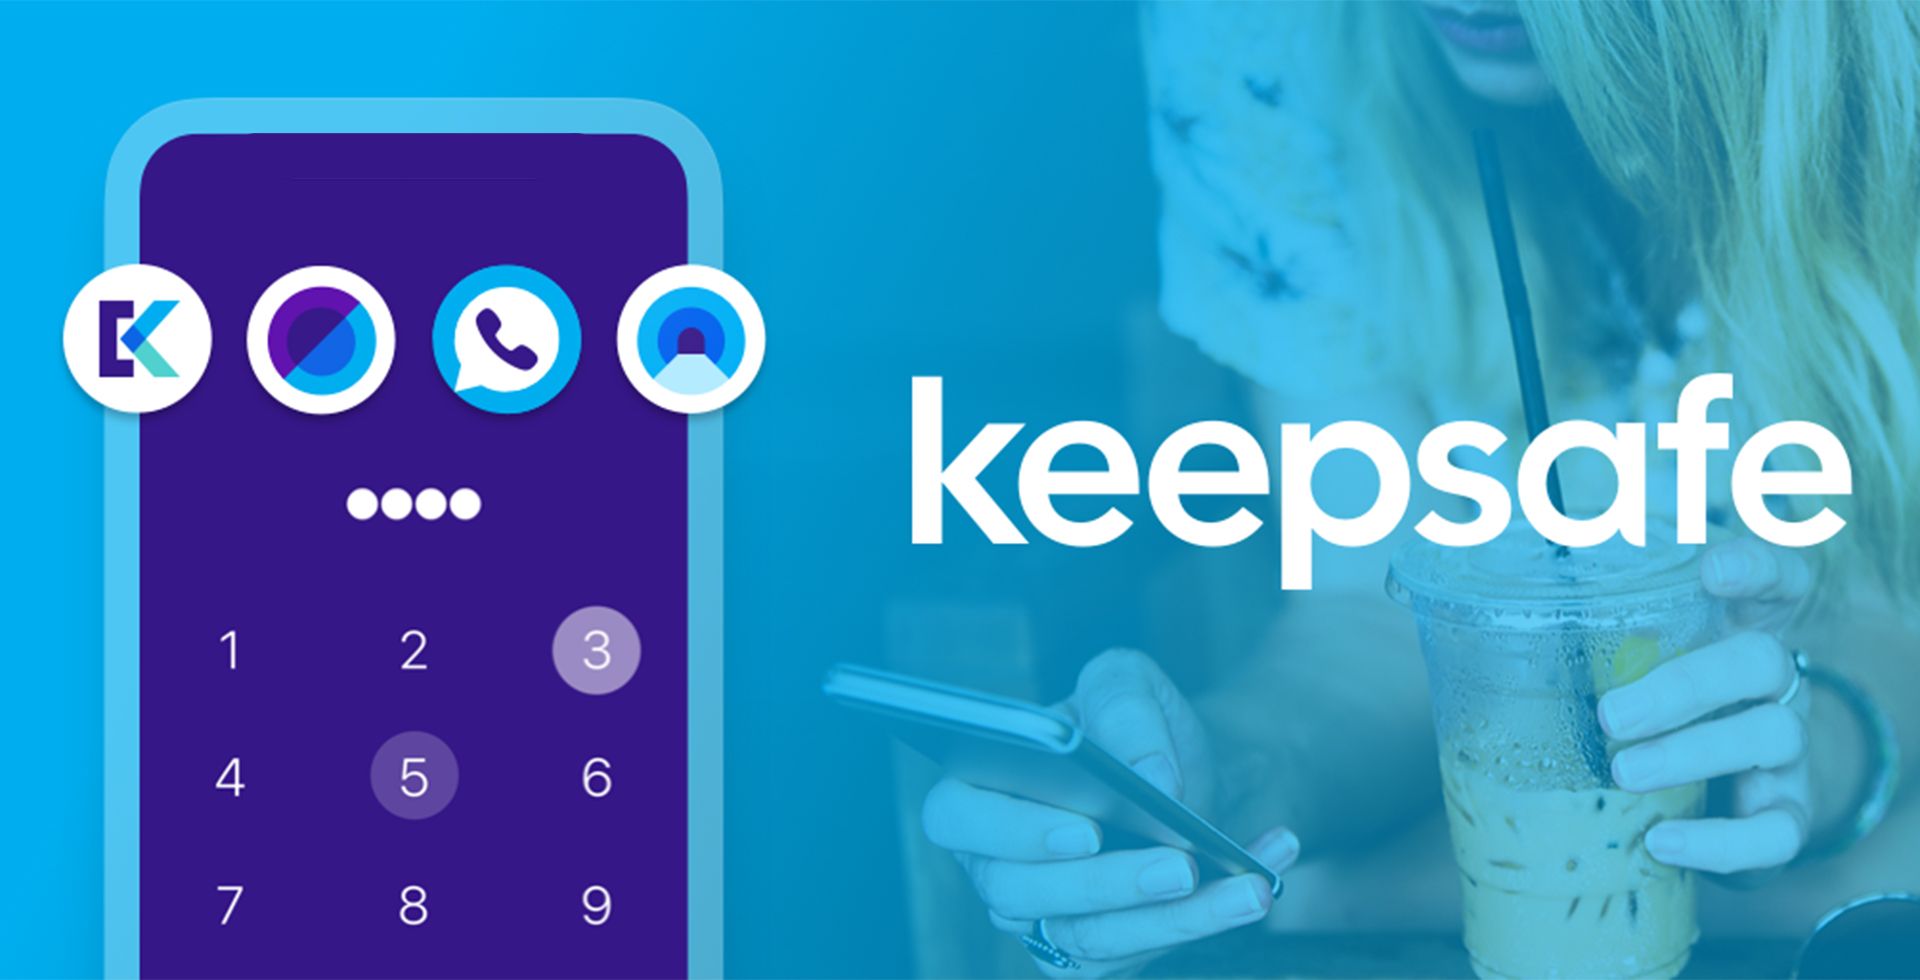 کاور اپلیکیشن Keepsafe دختری در حال کار با گوشی هوشمند